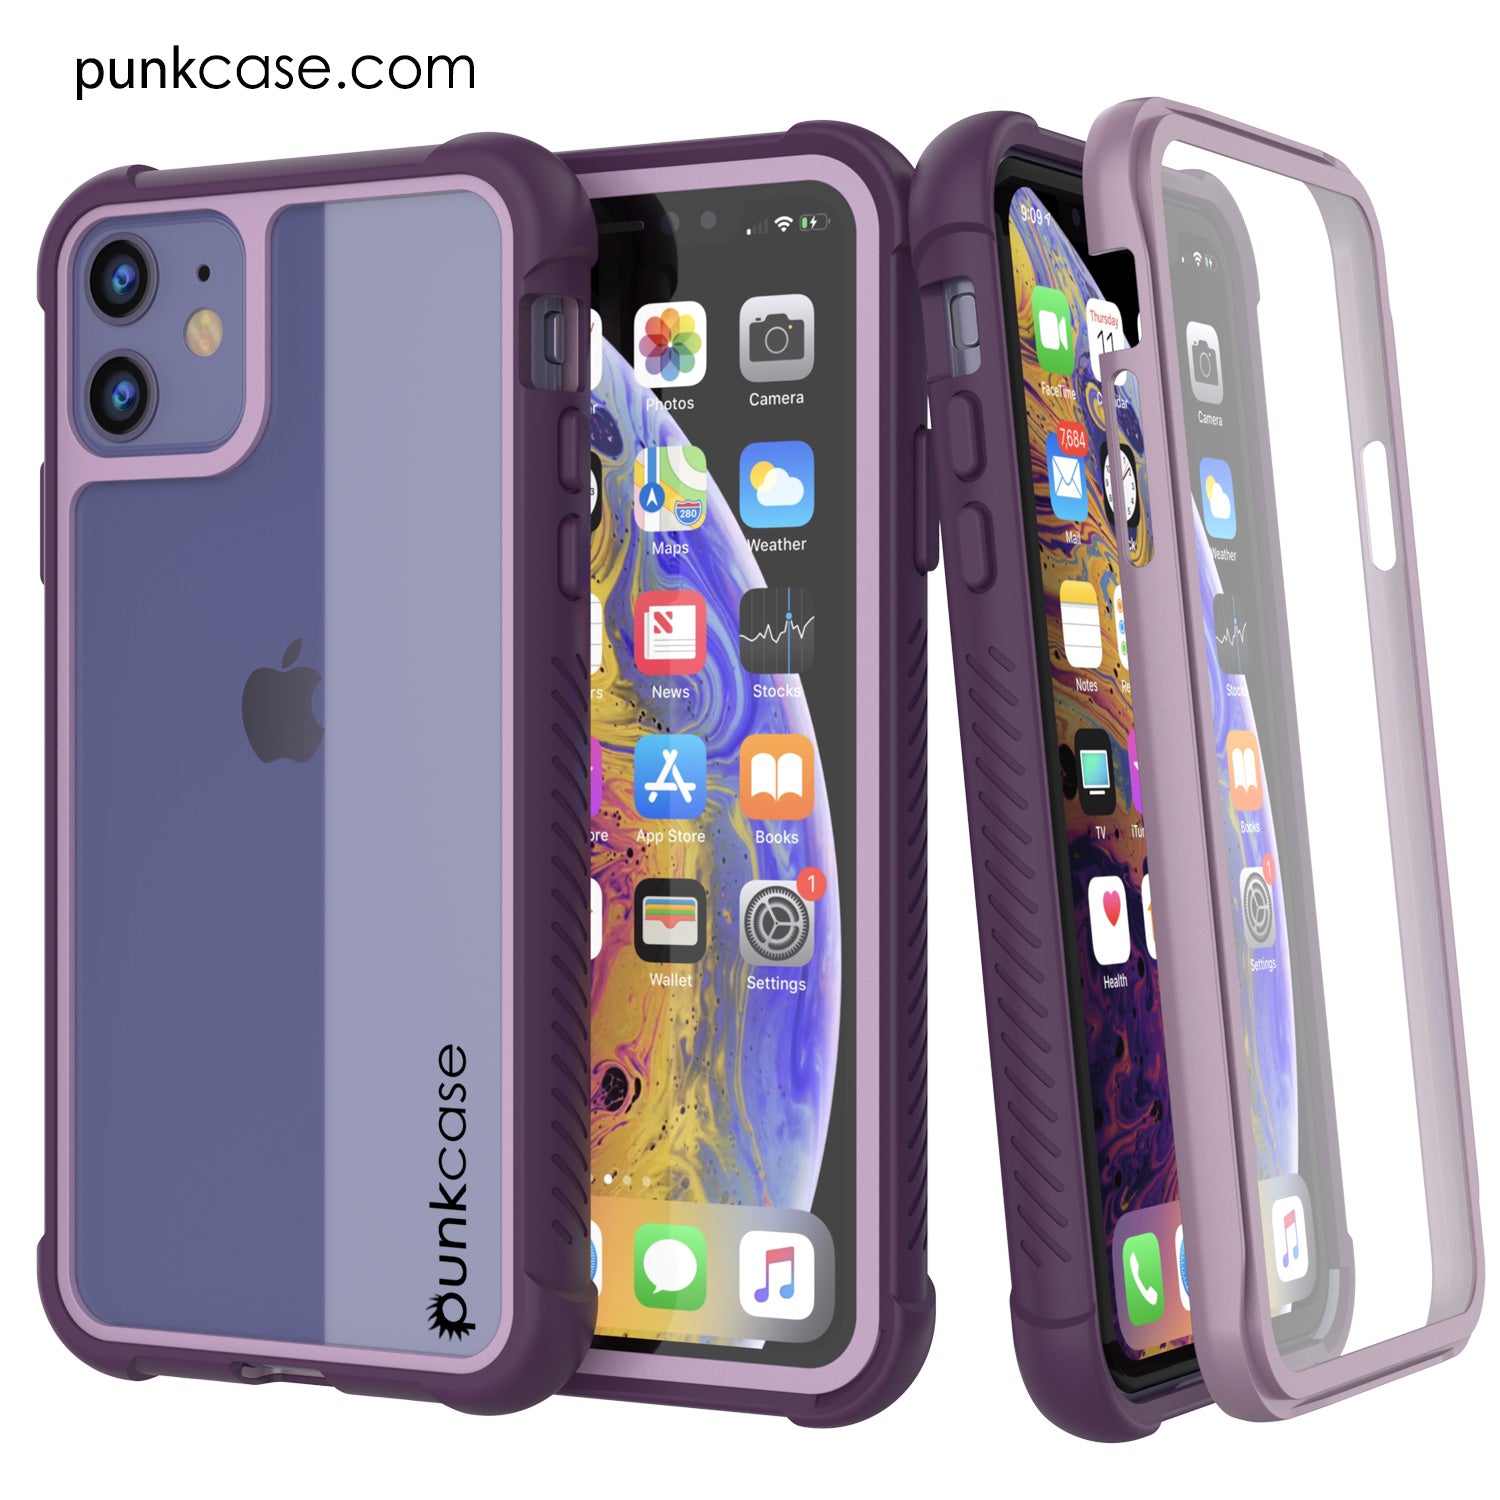  OUNNE iPhone 11 Pro Max Case, Full-Body Heavy Duty